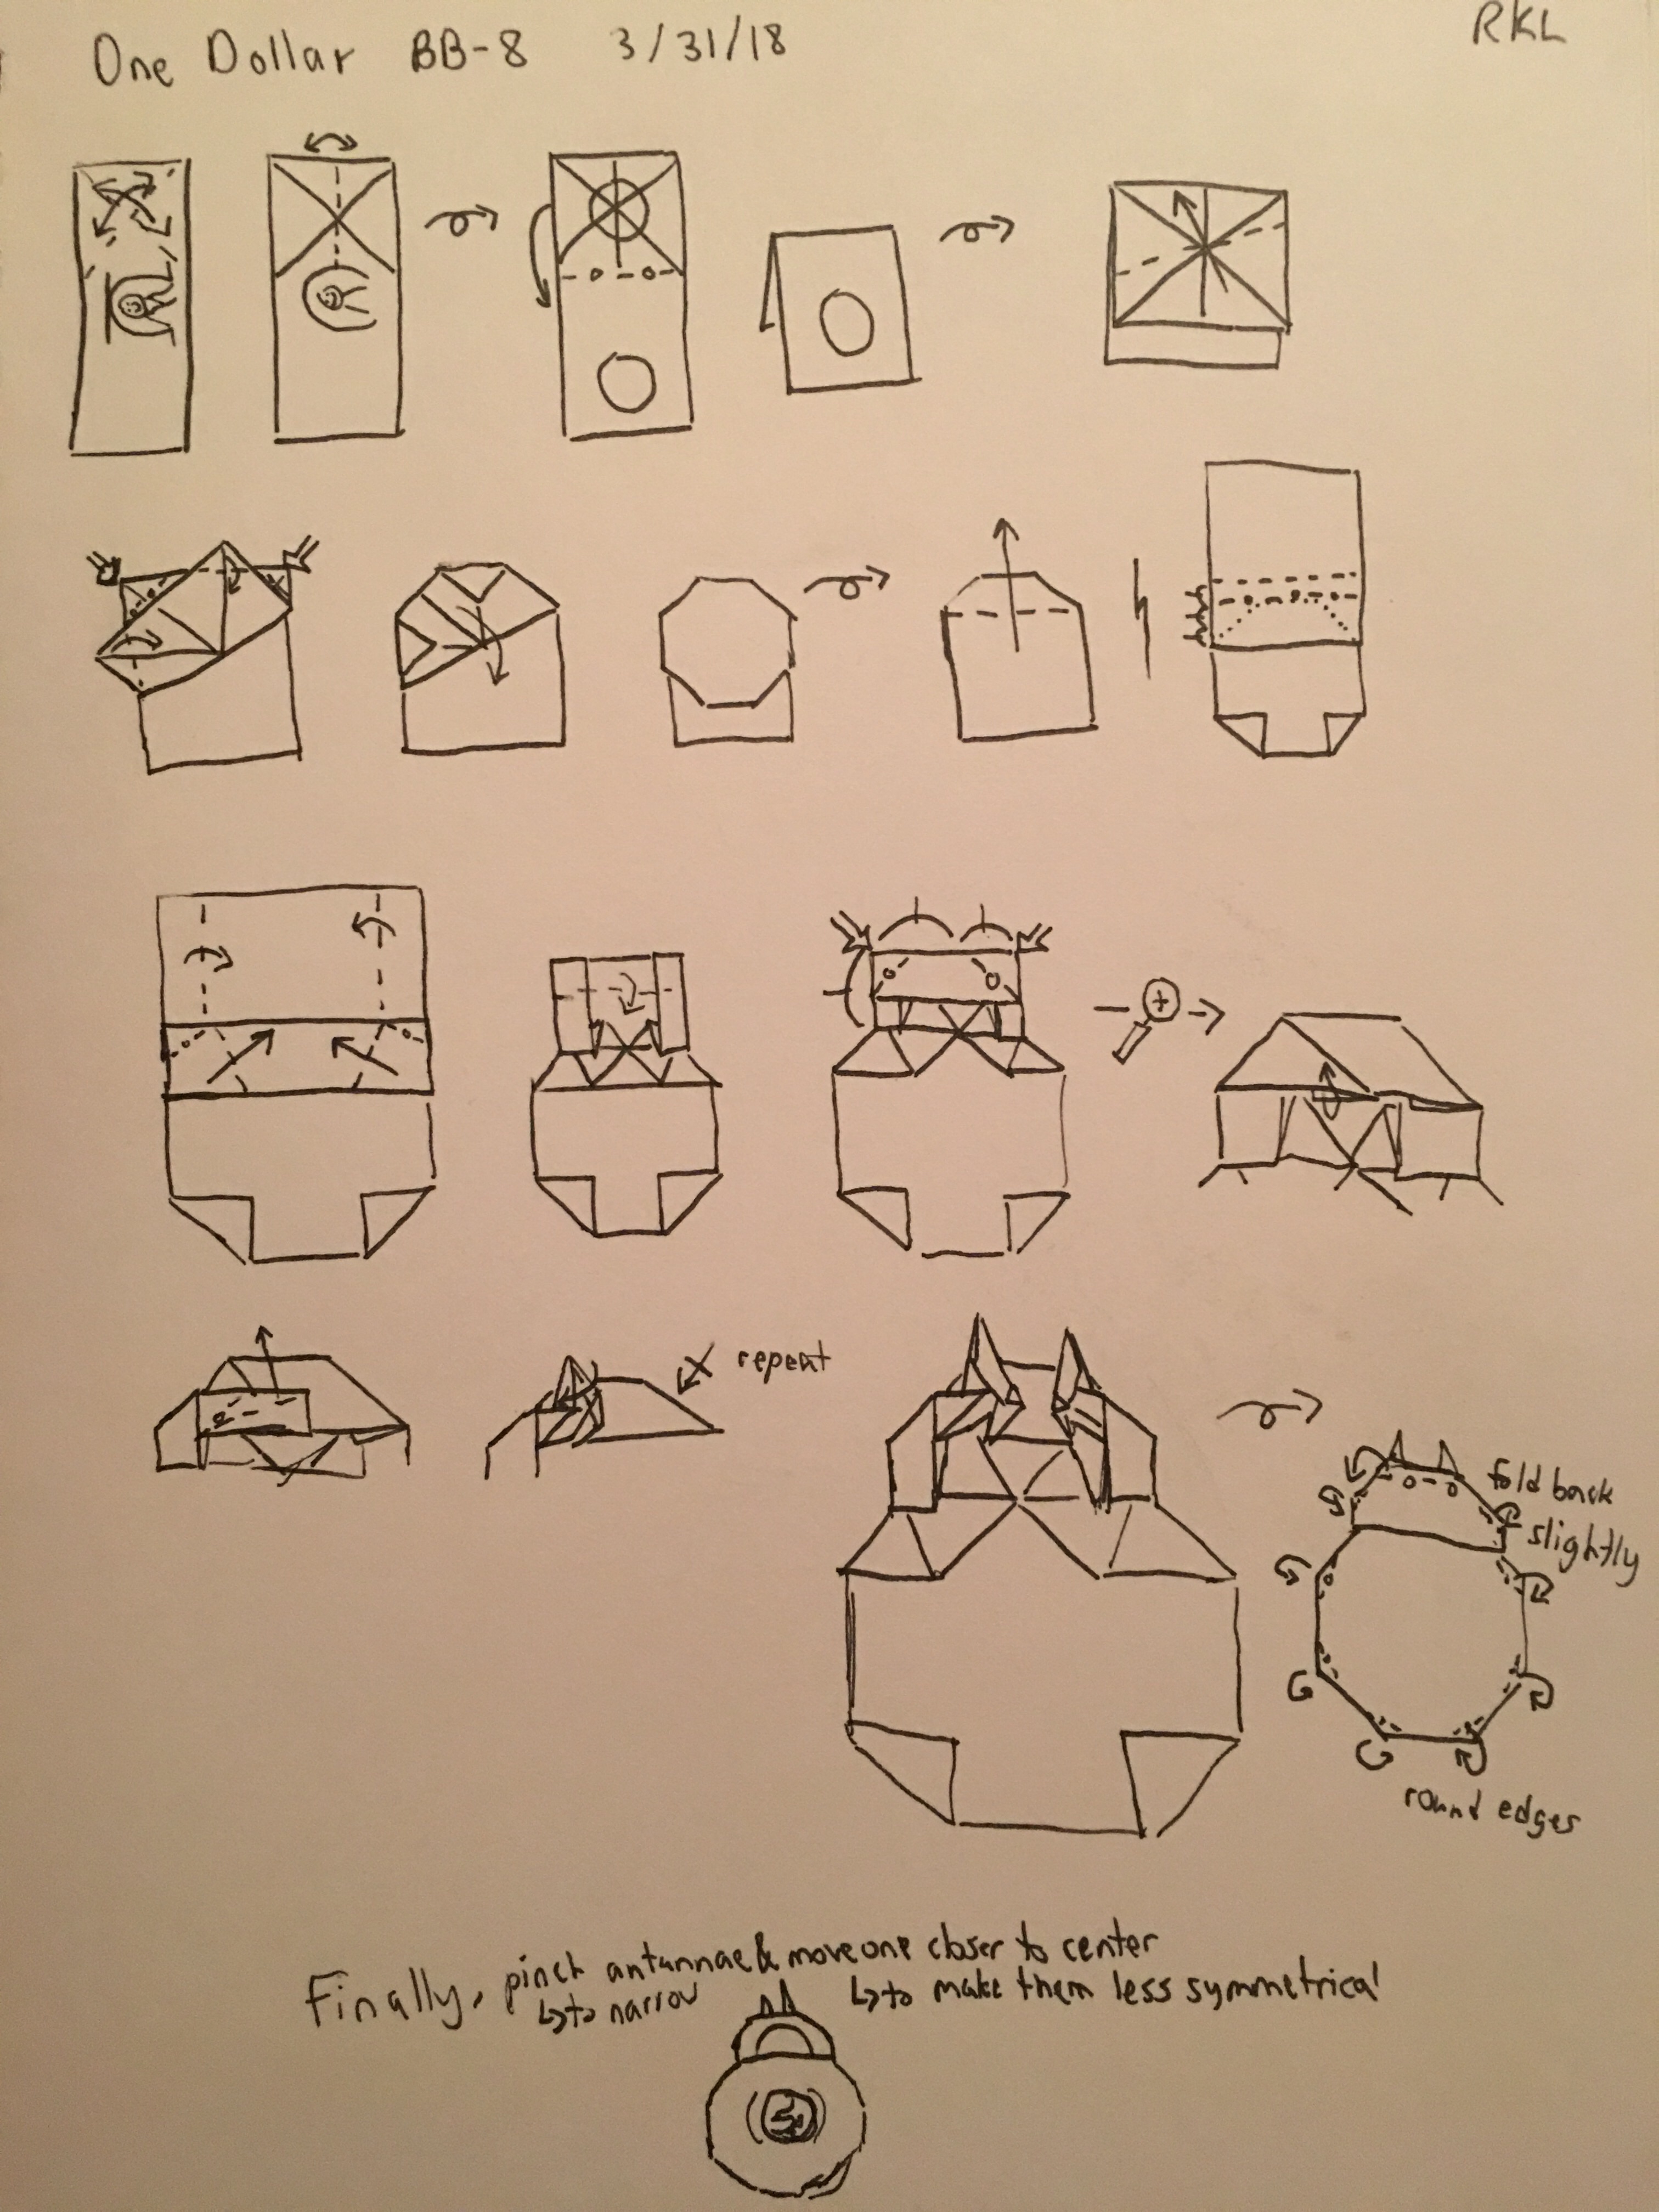 Diagrams for dollar origami BB-8